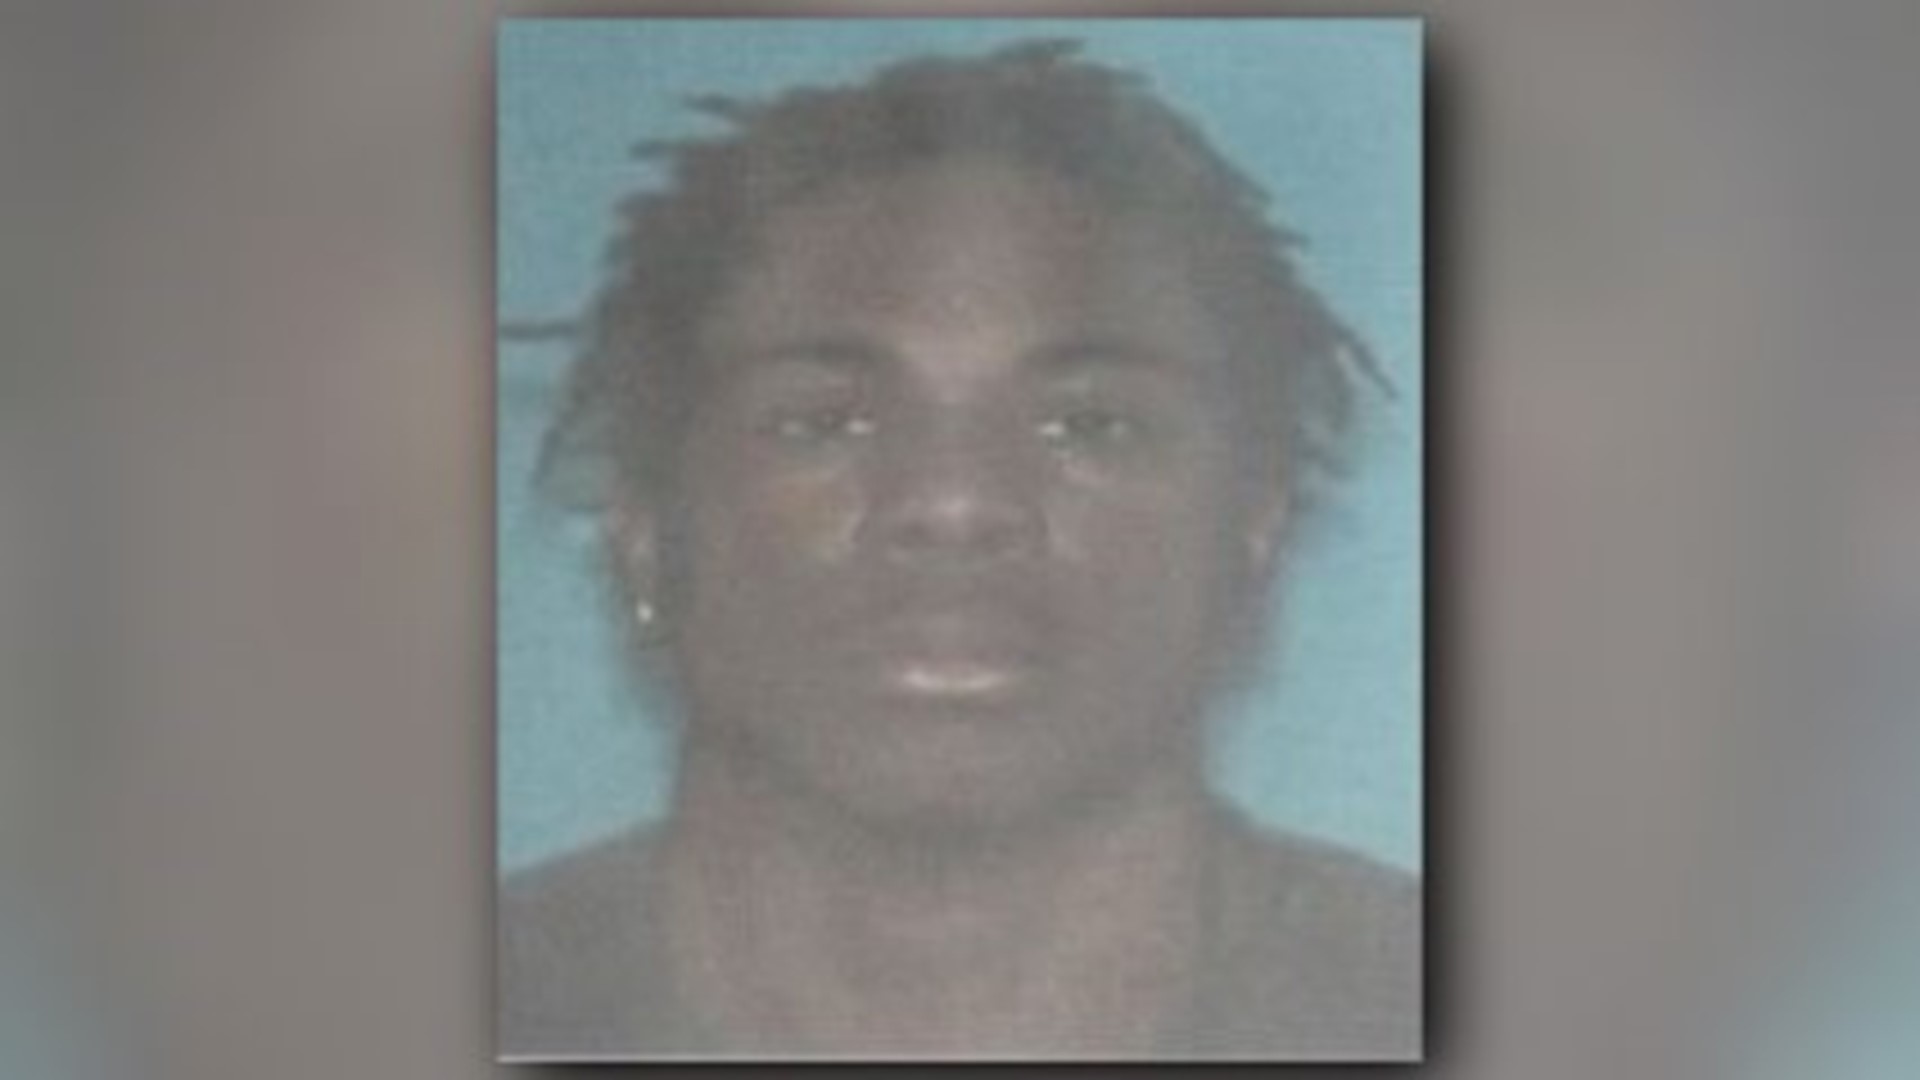 The suspect was identified as 21-year-old Kobe Juwan Miller of Columbia, Missouri.